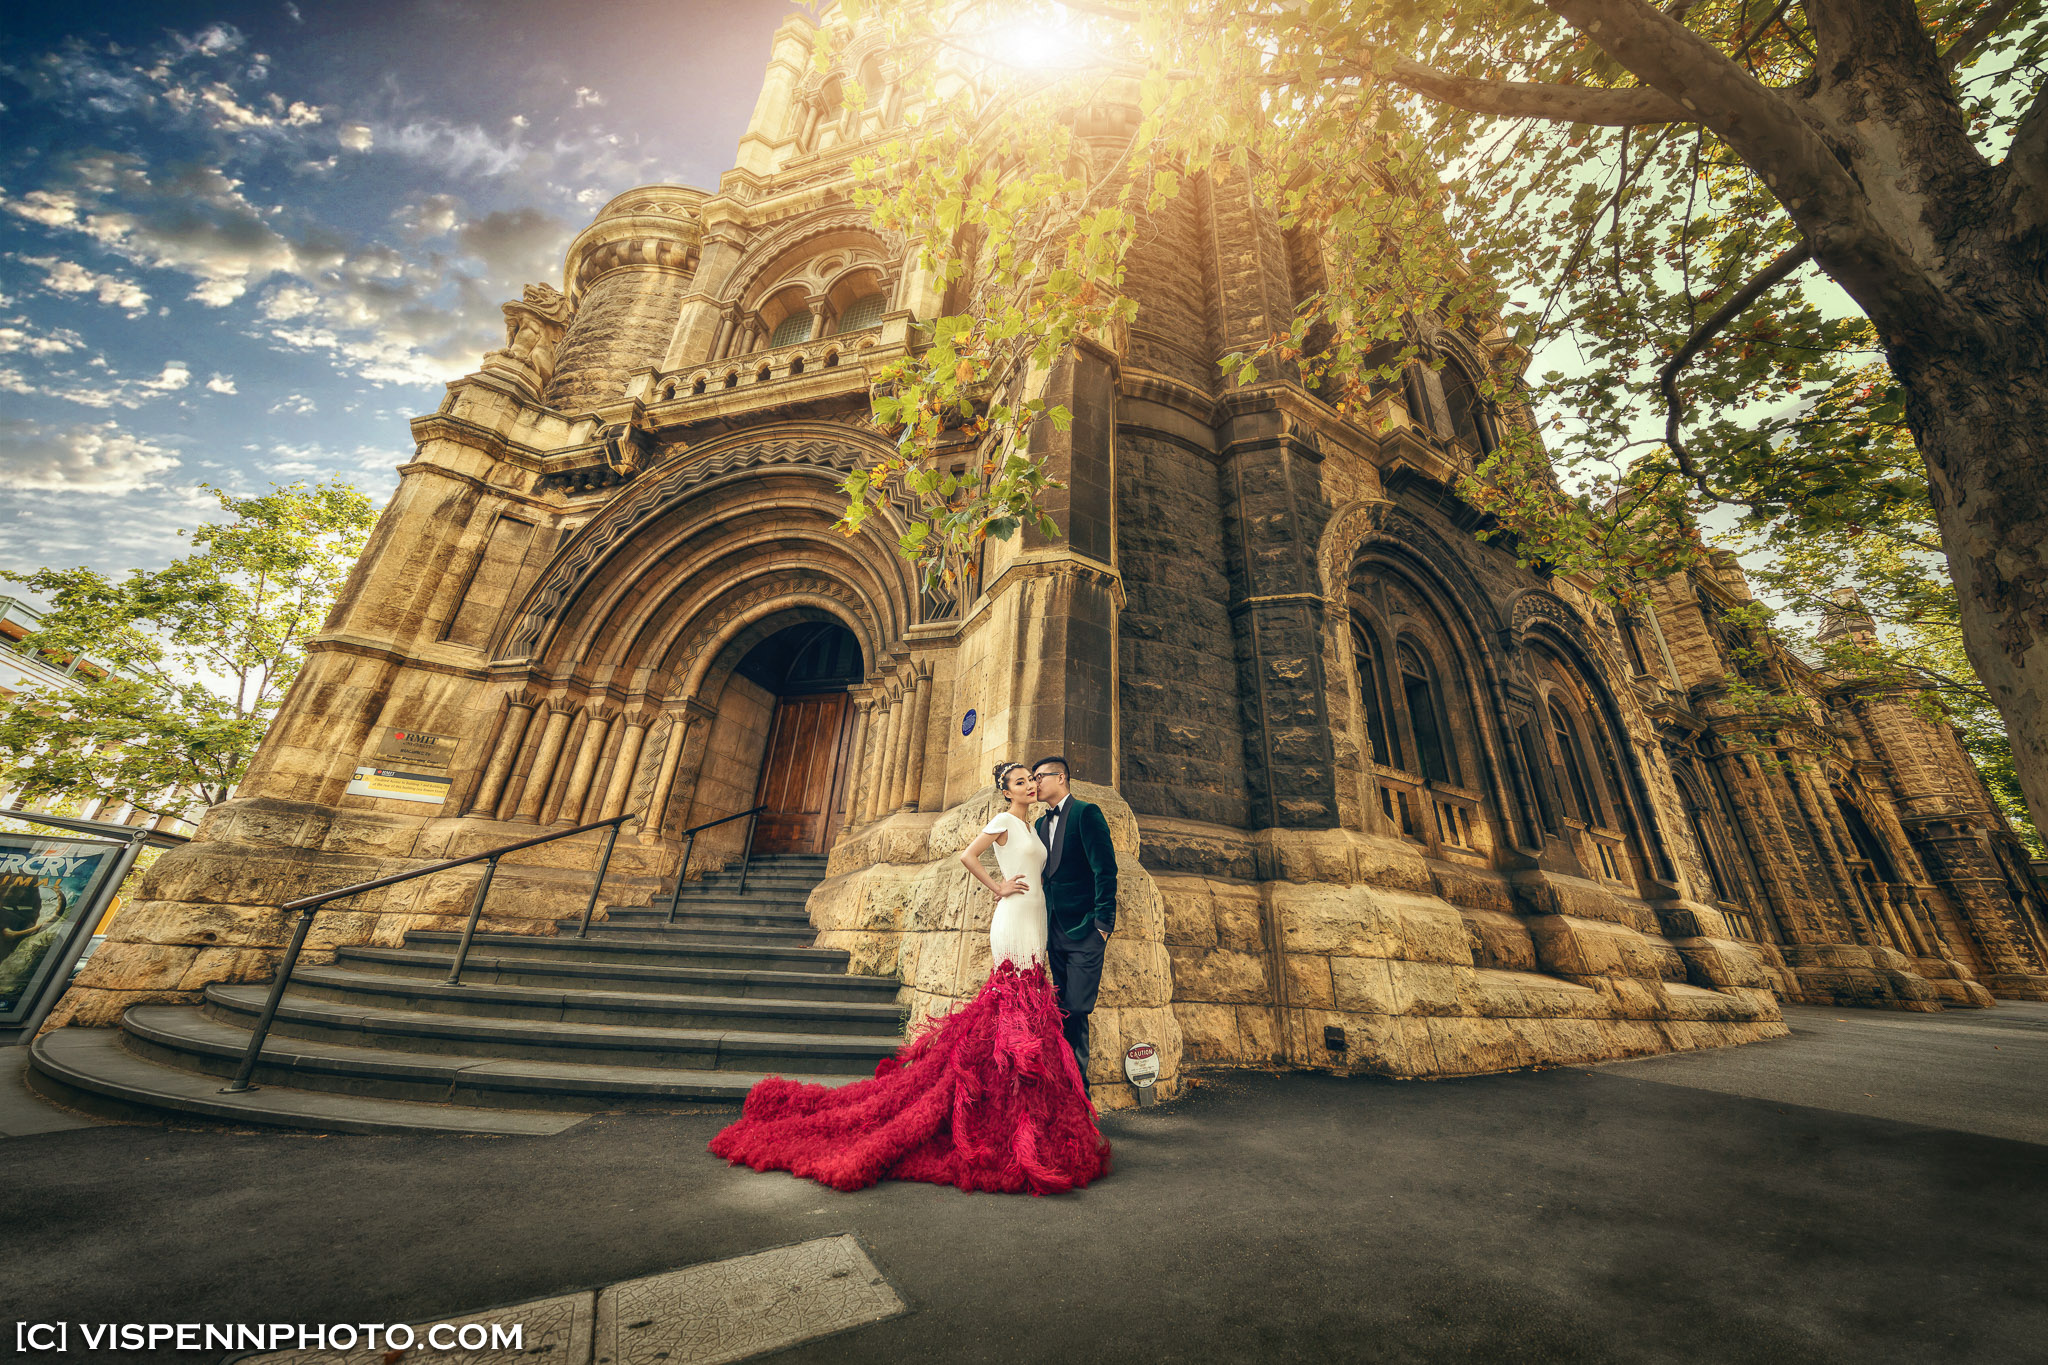 PRE WEDDING Photography Melbourne VISPENN 墨尔本 婚纱照 结婚照 婚纱摄影 VISPENN StacieYi PreWedding 5843 1